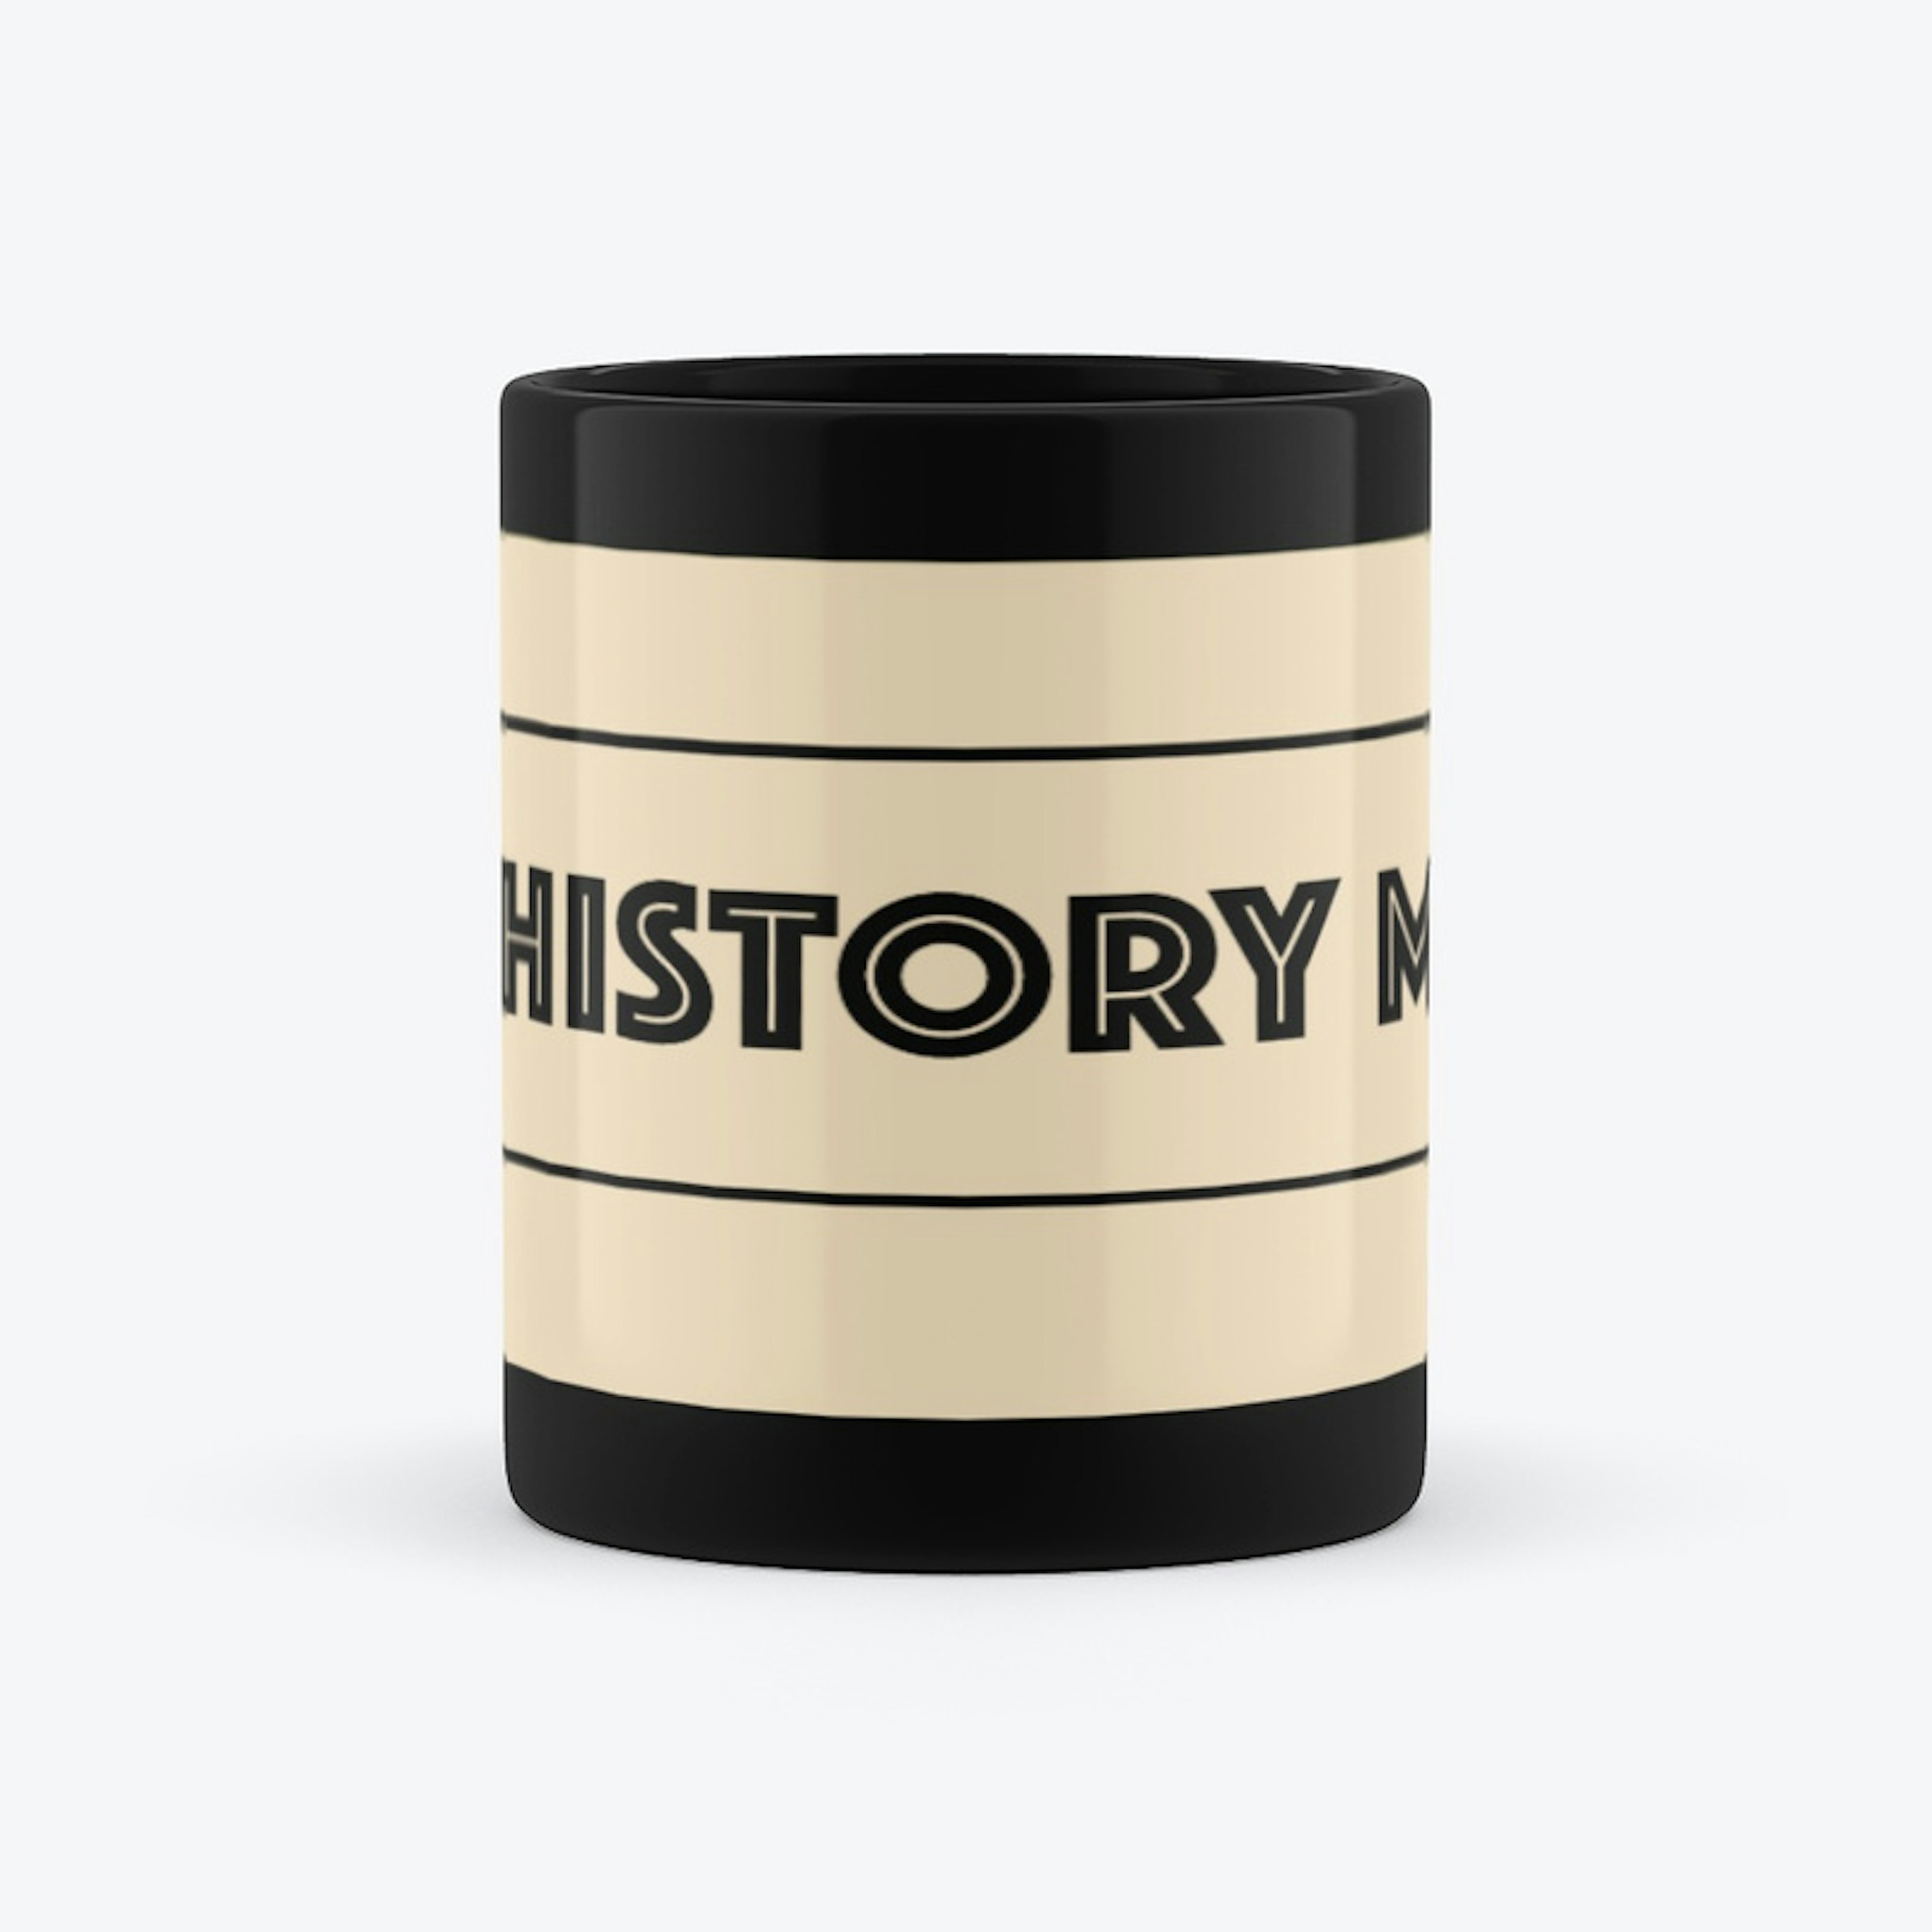 History Mug - Black on Tan